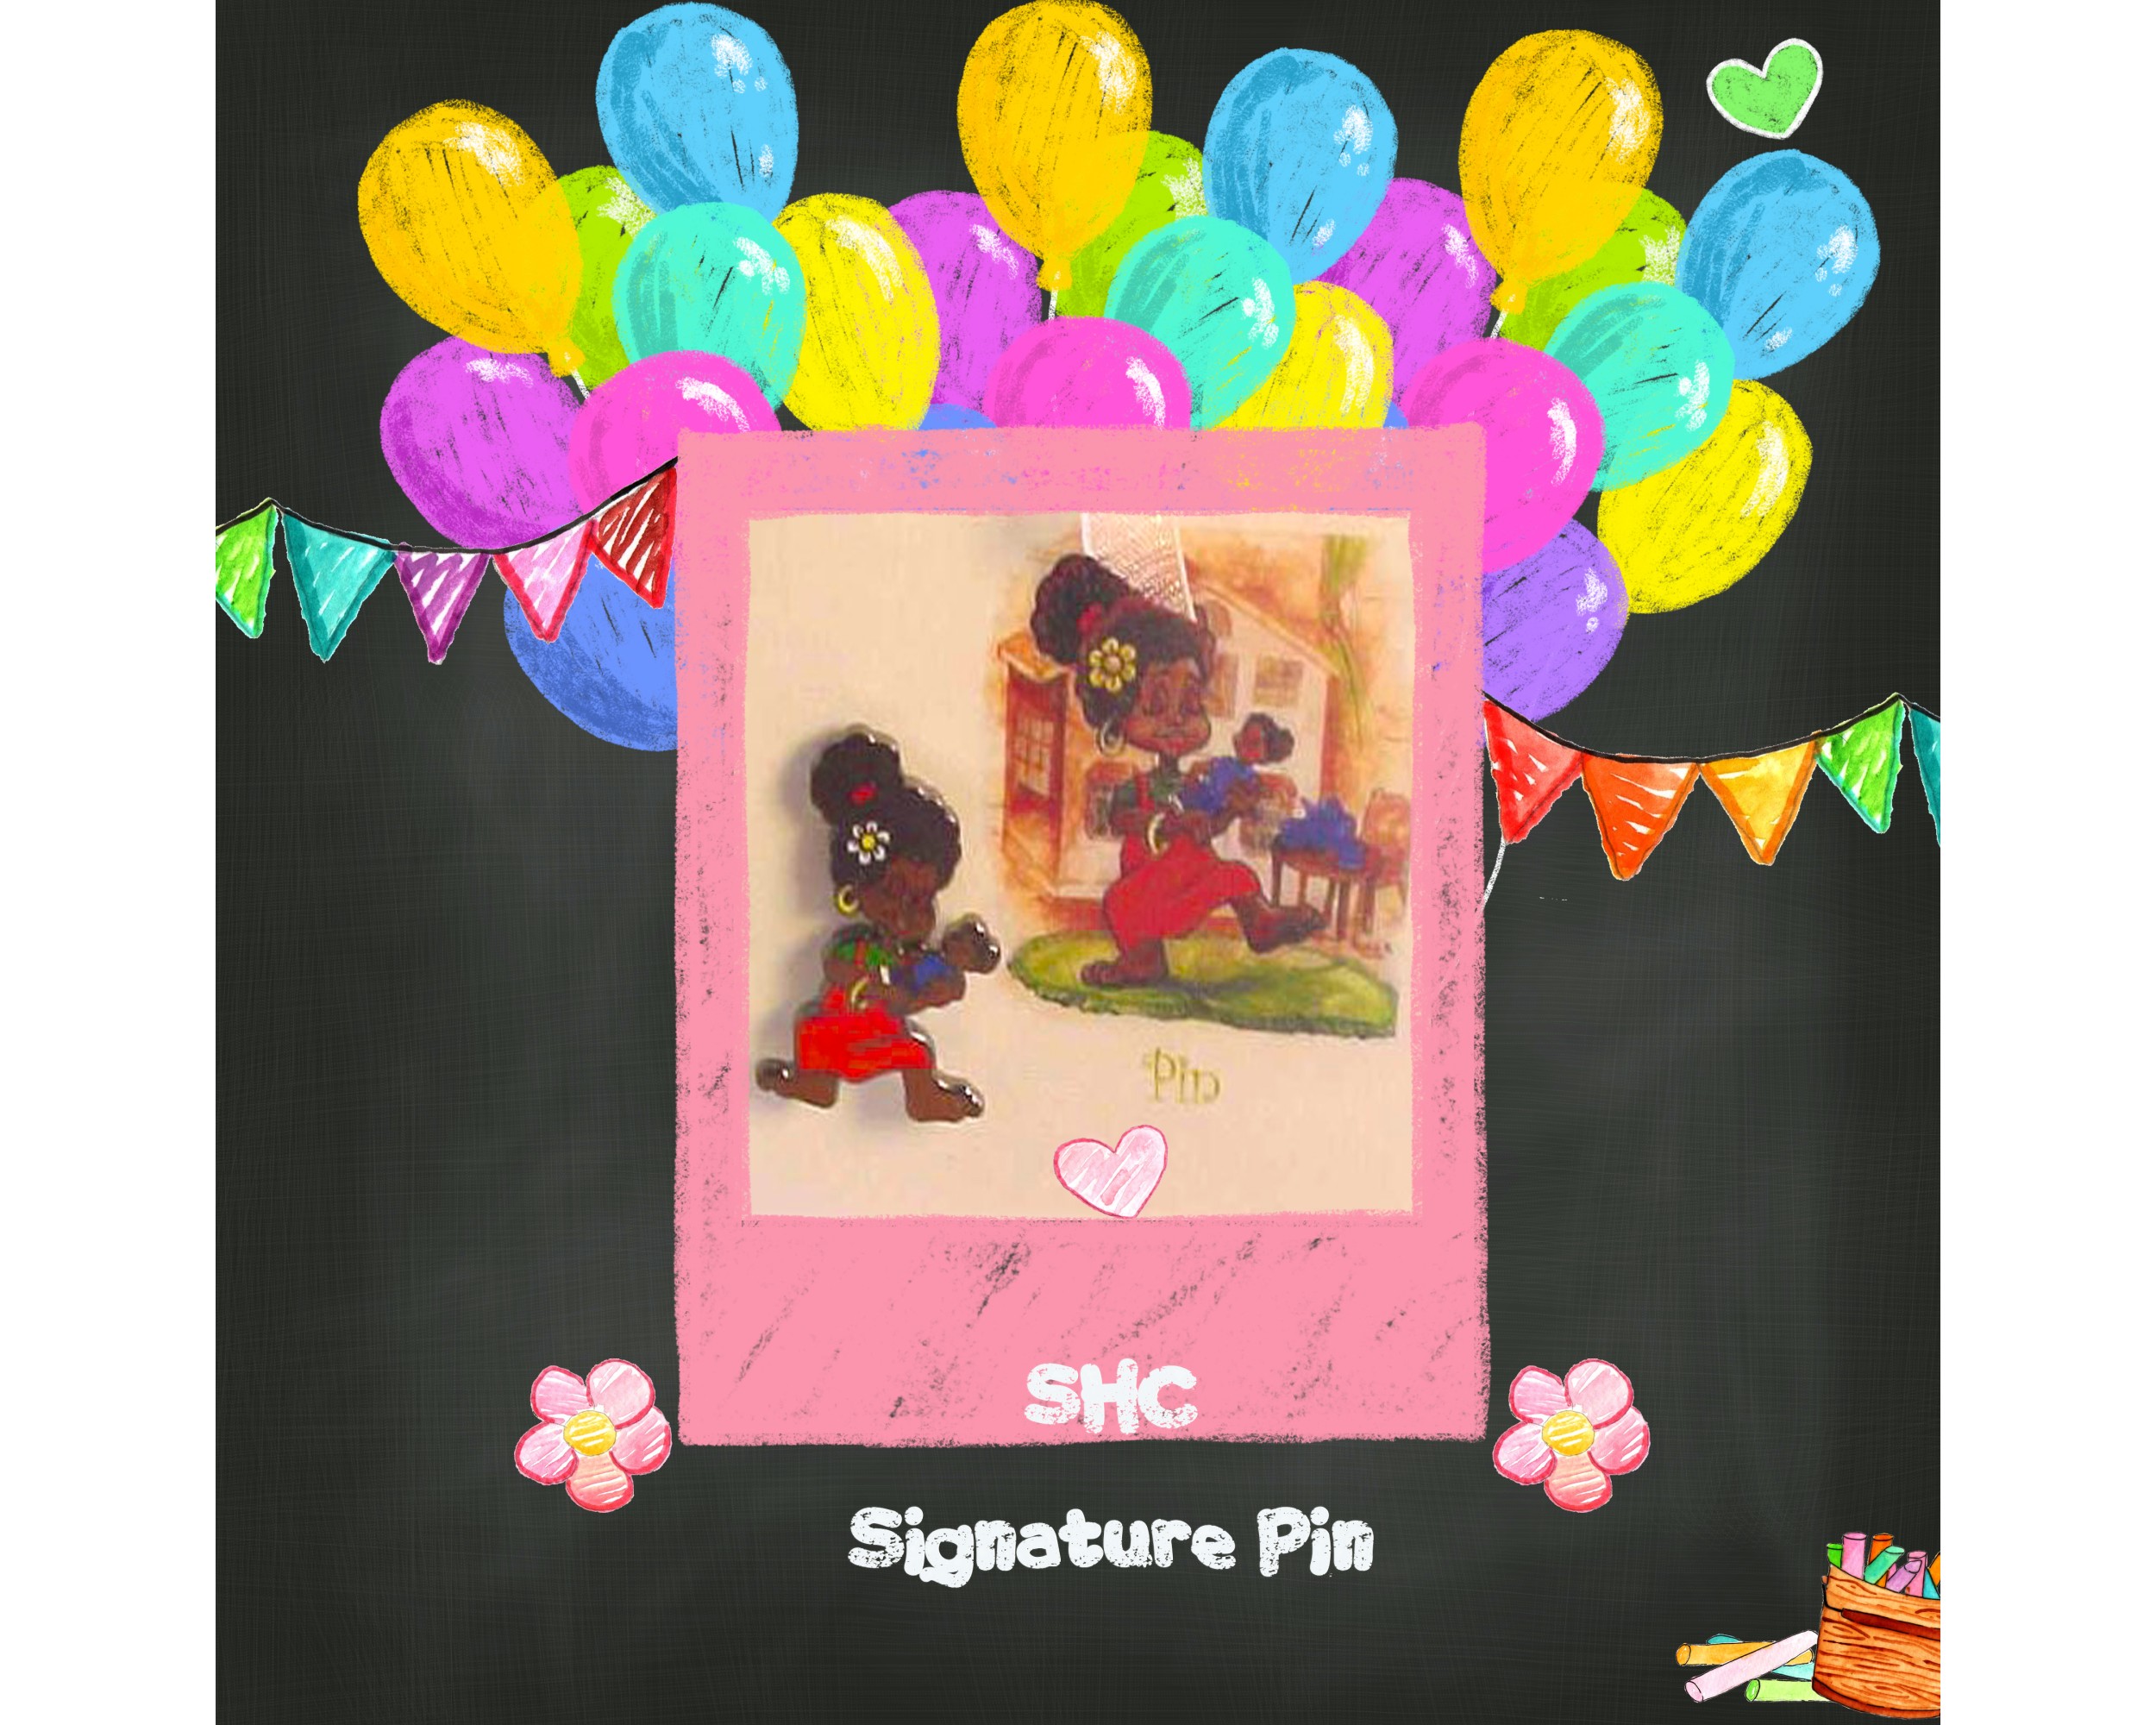 SHC Signature Pin